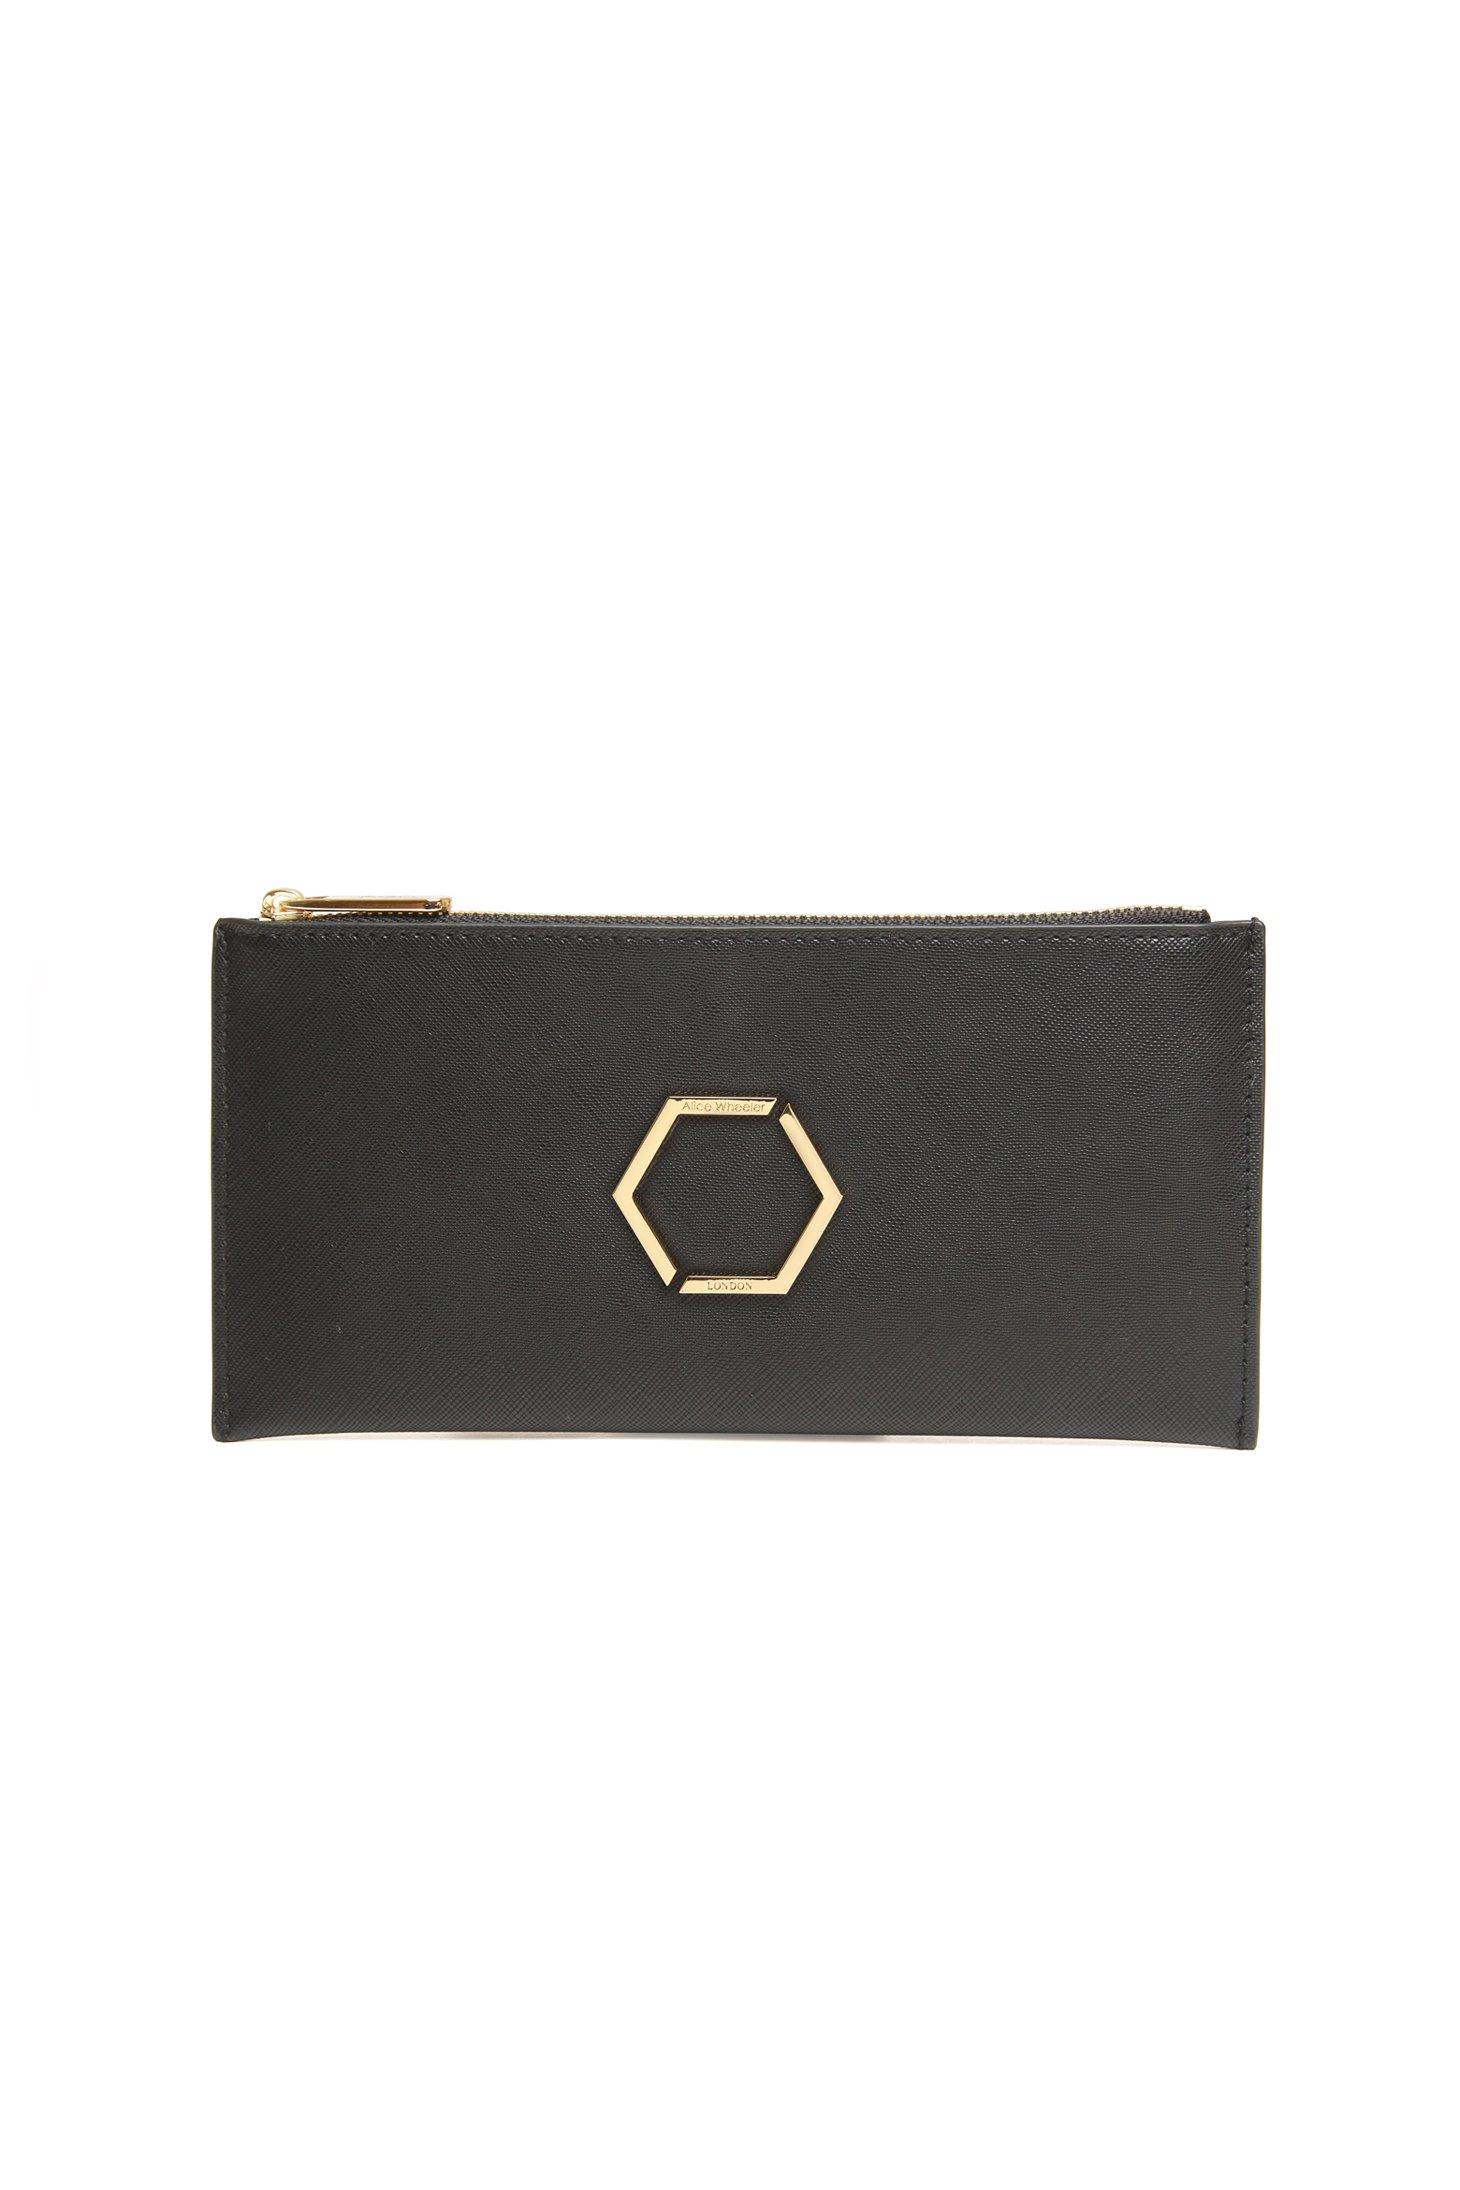 Bags & Purses | 'Kate' Leather Handbag | Pure Luxuries London